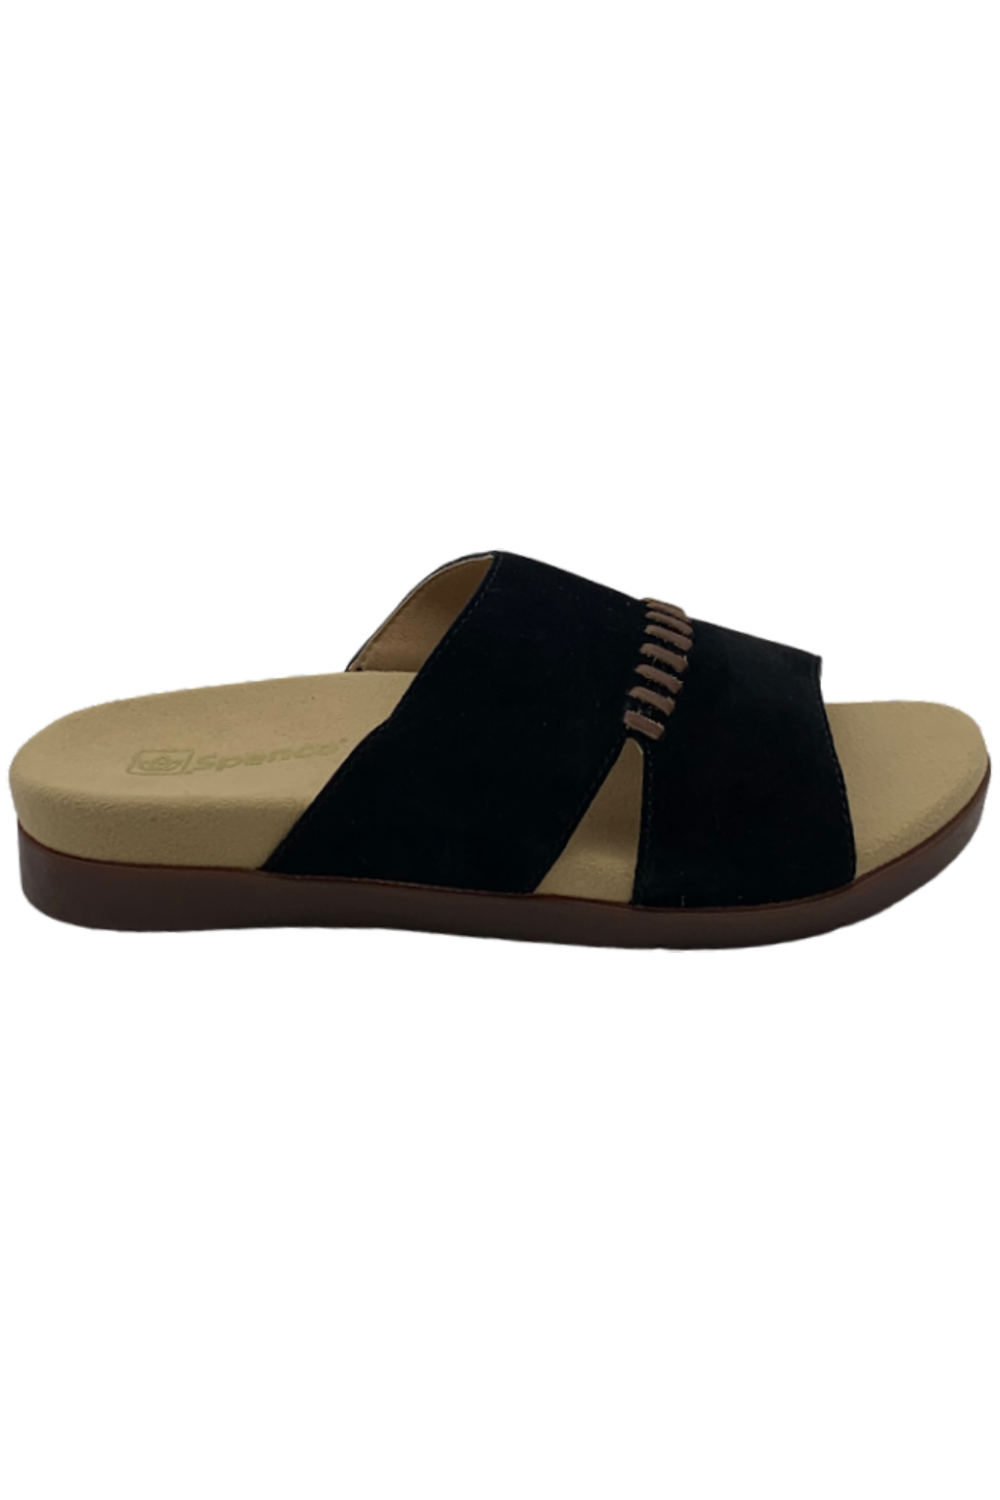 Spenco Orthotic Leather Slide Sandals Twilight Woven Black | Jender